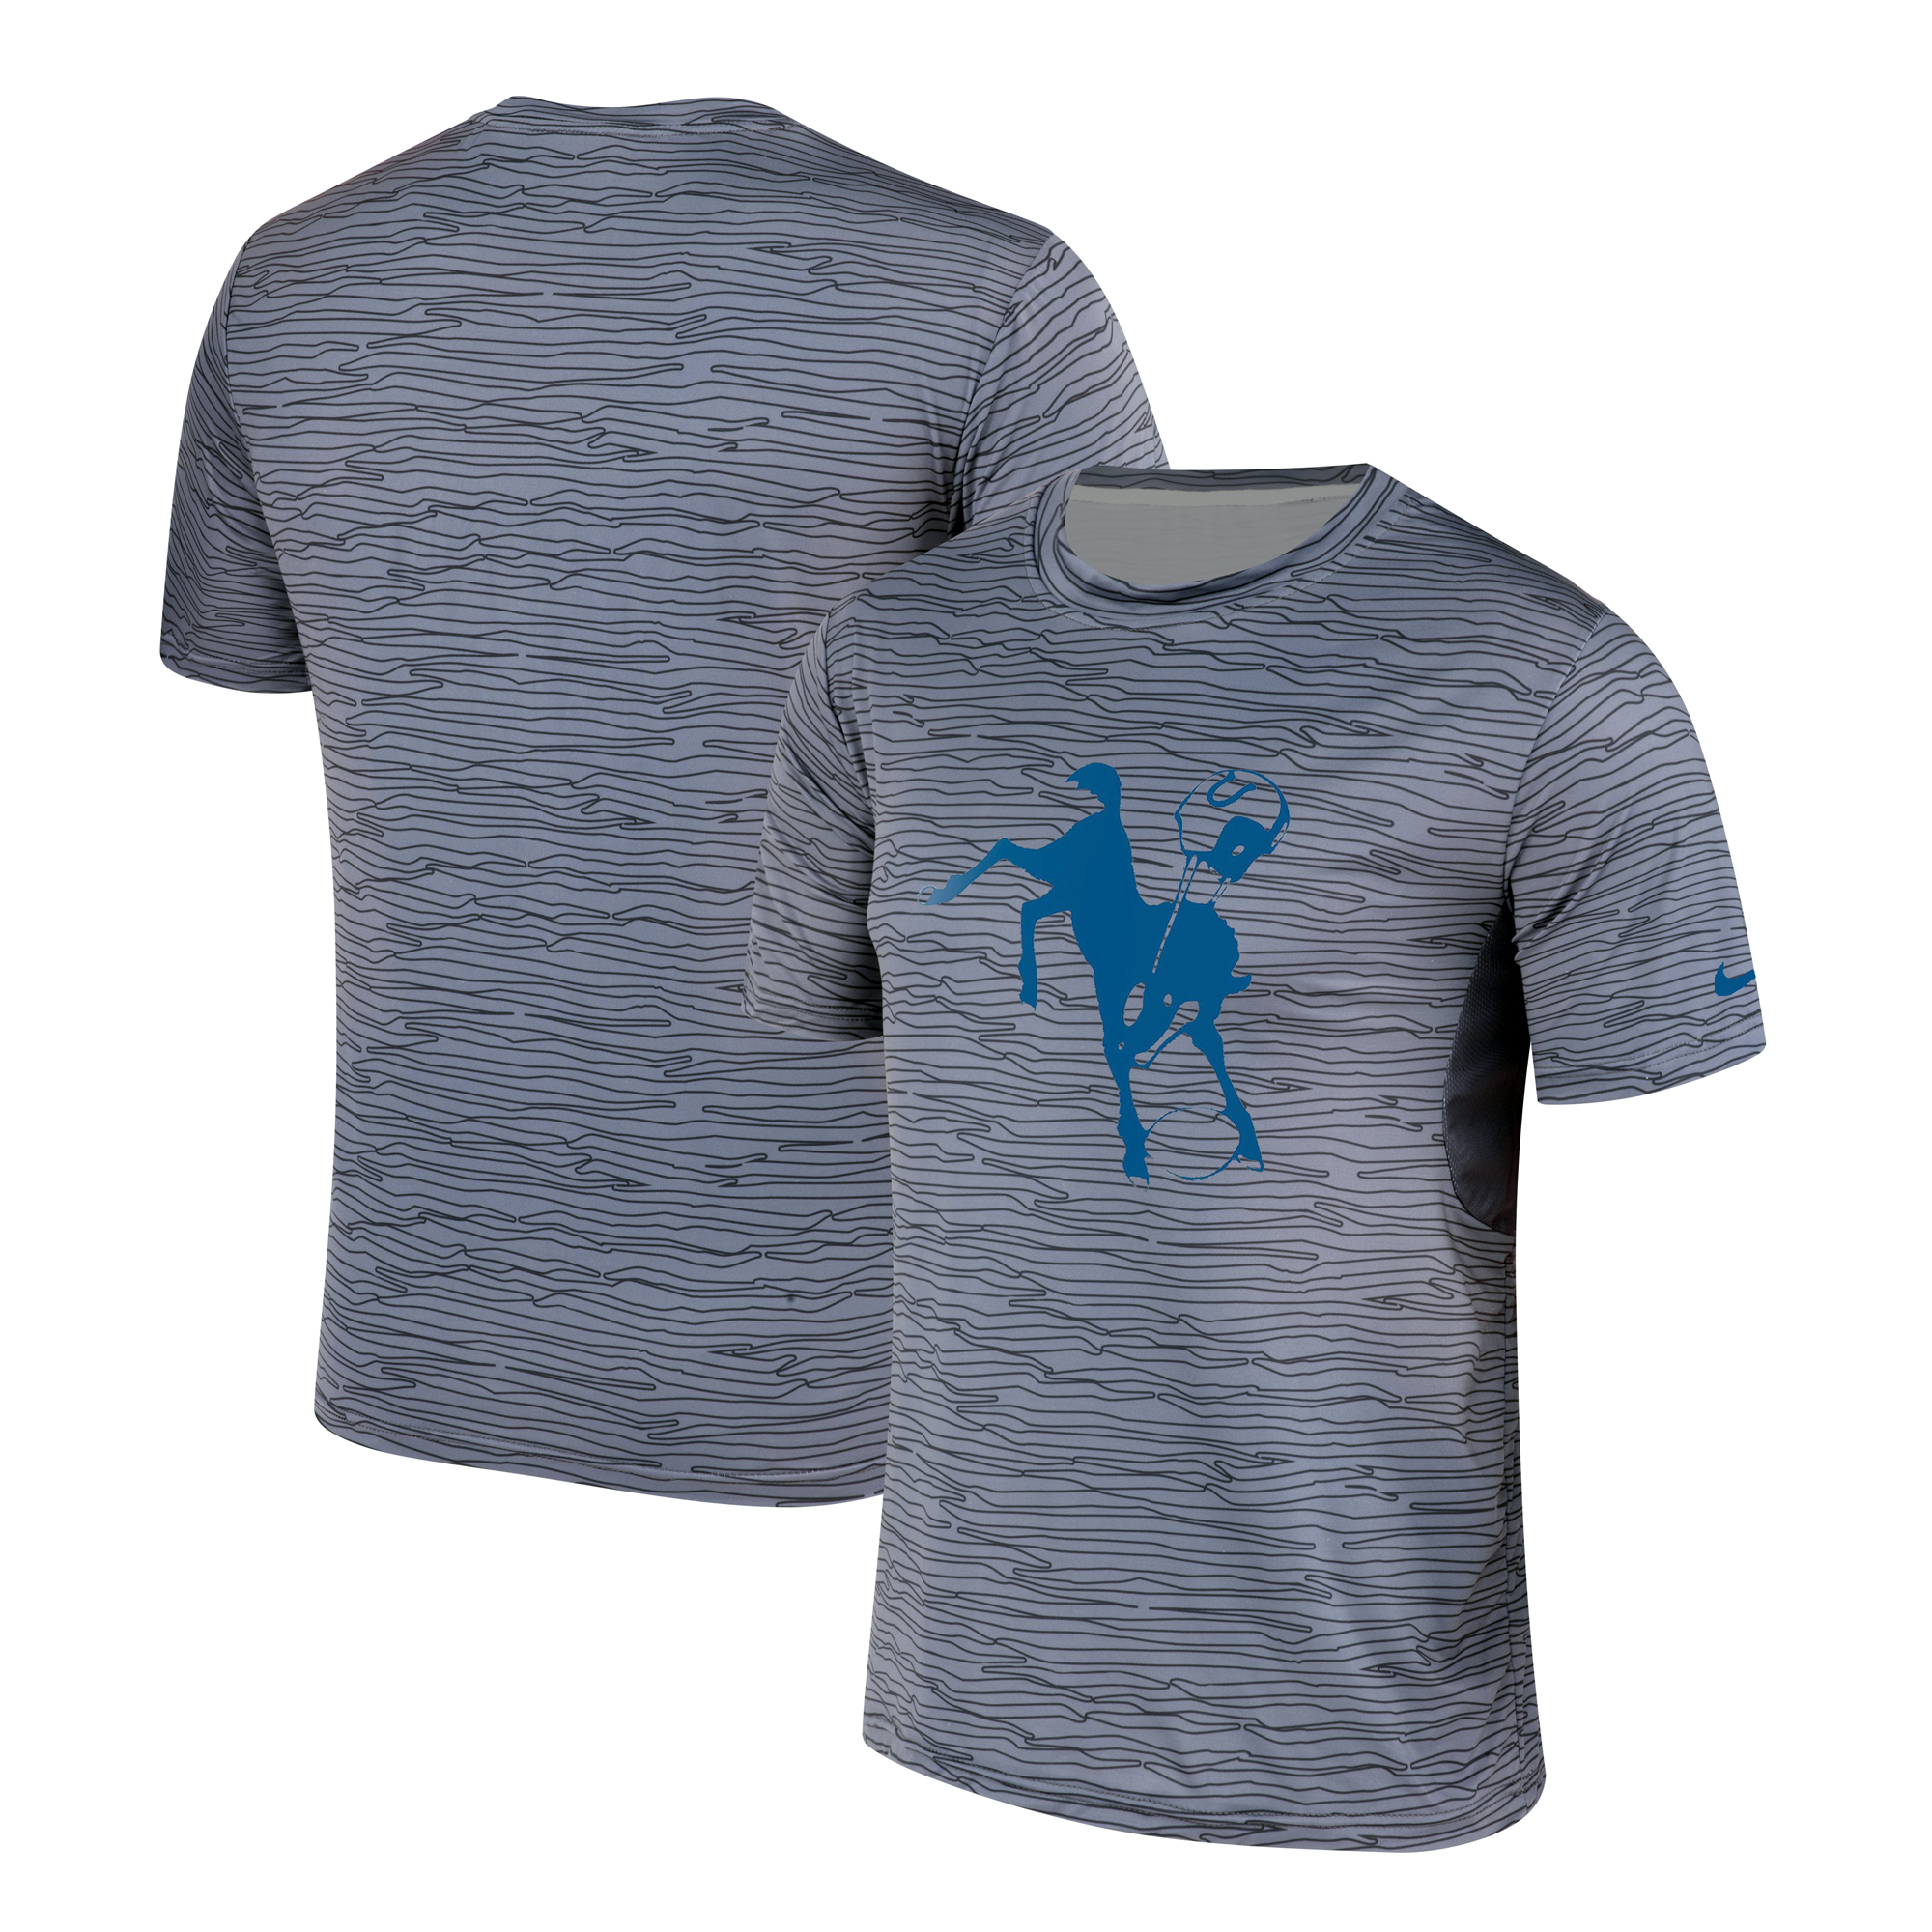 Men's Indianapolis Colts Nike Gray Black Striped Logo Performance T-Shirt